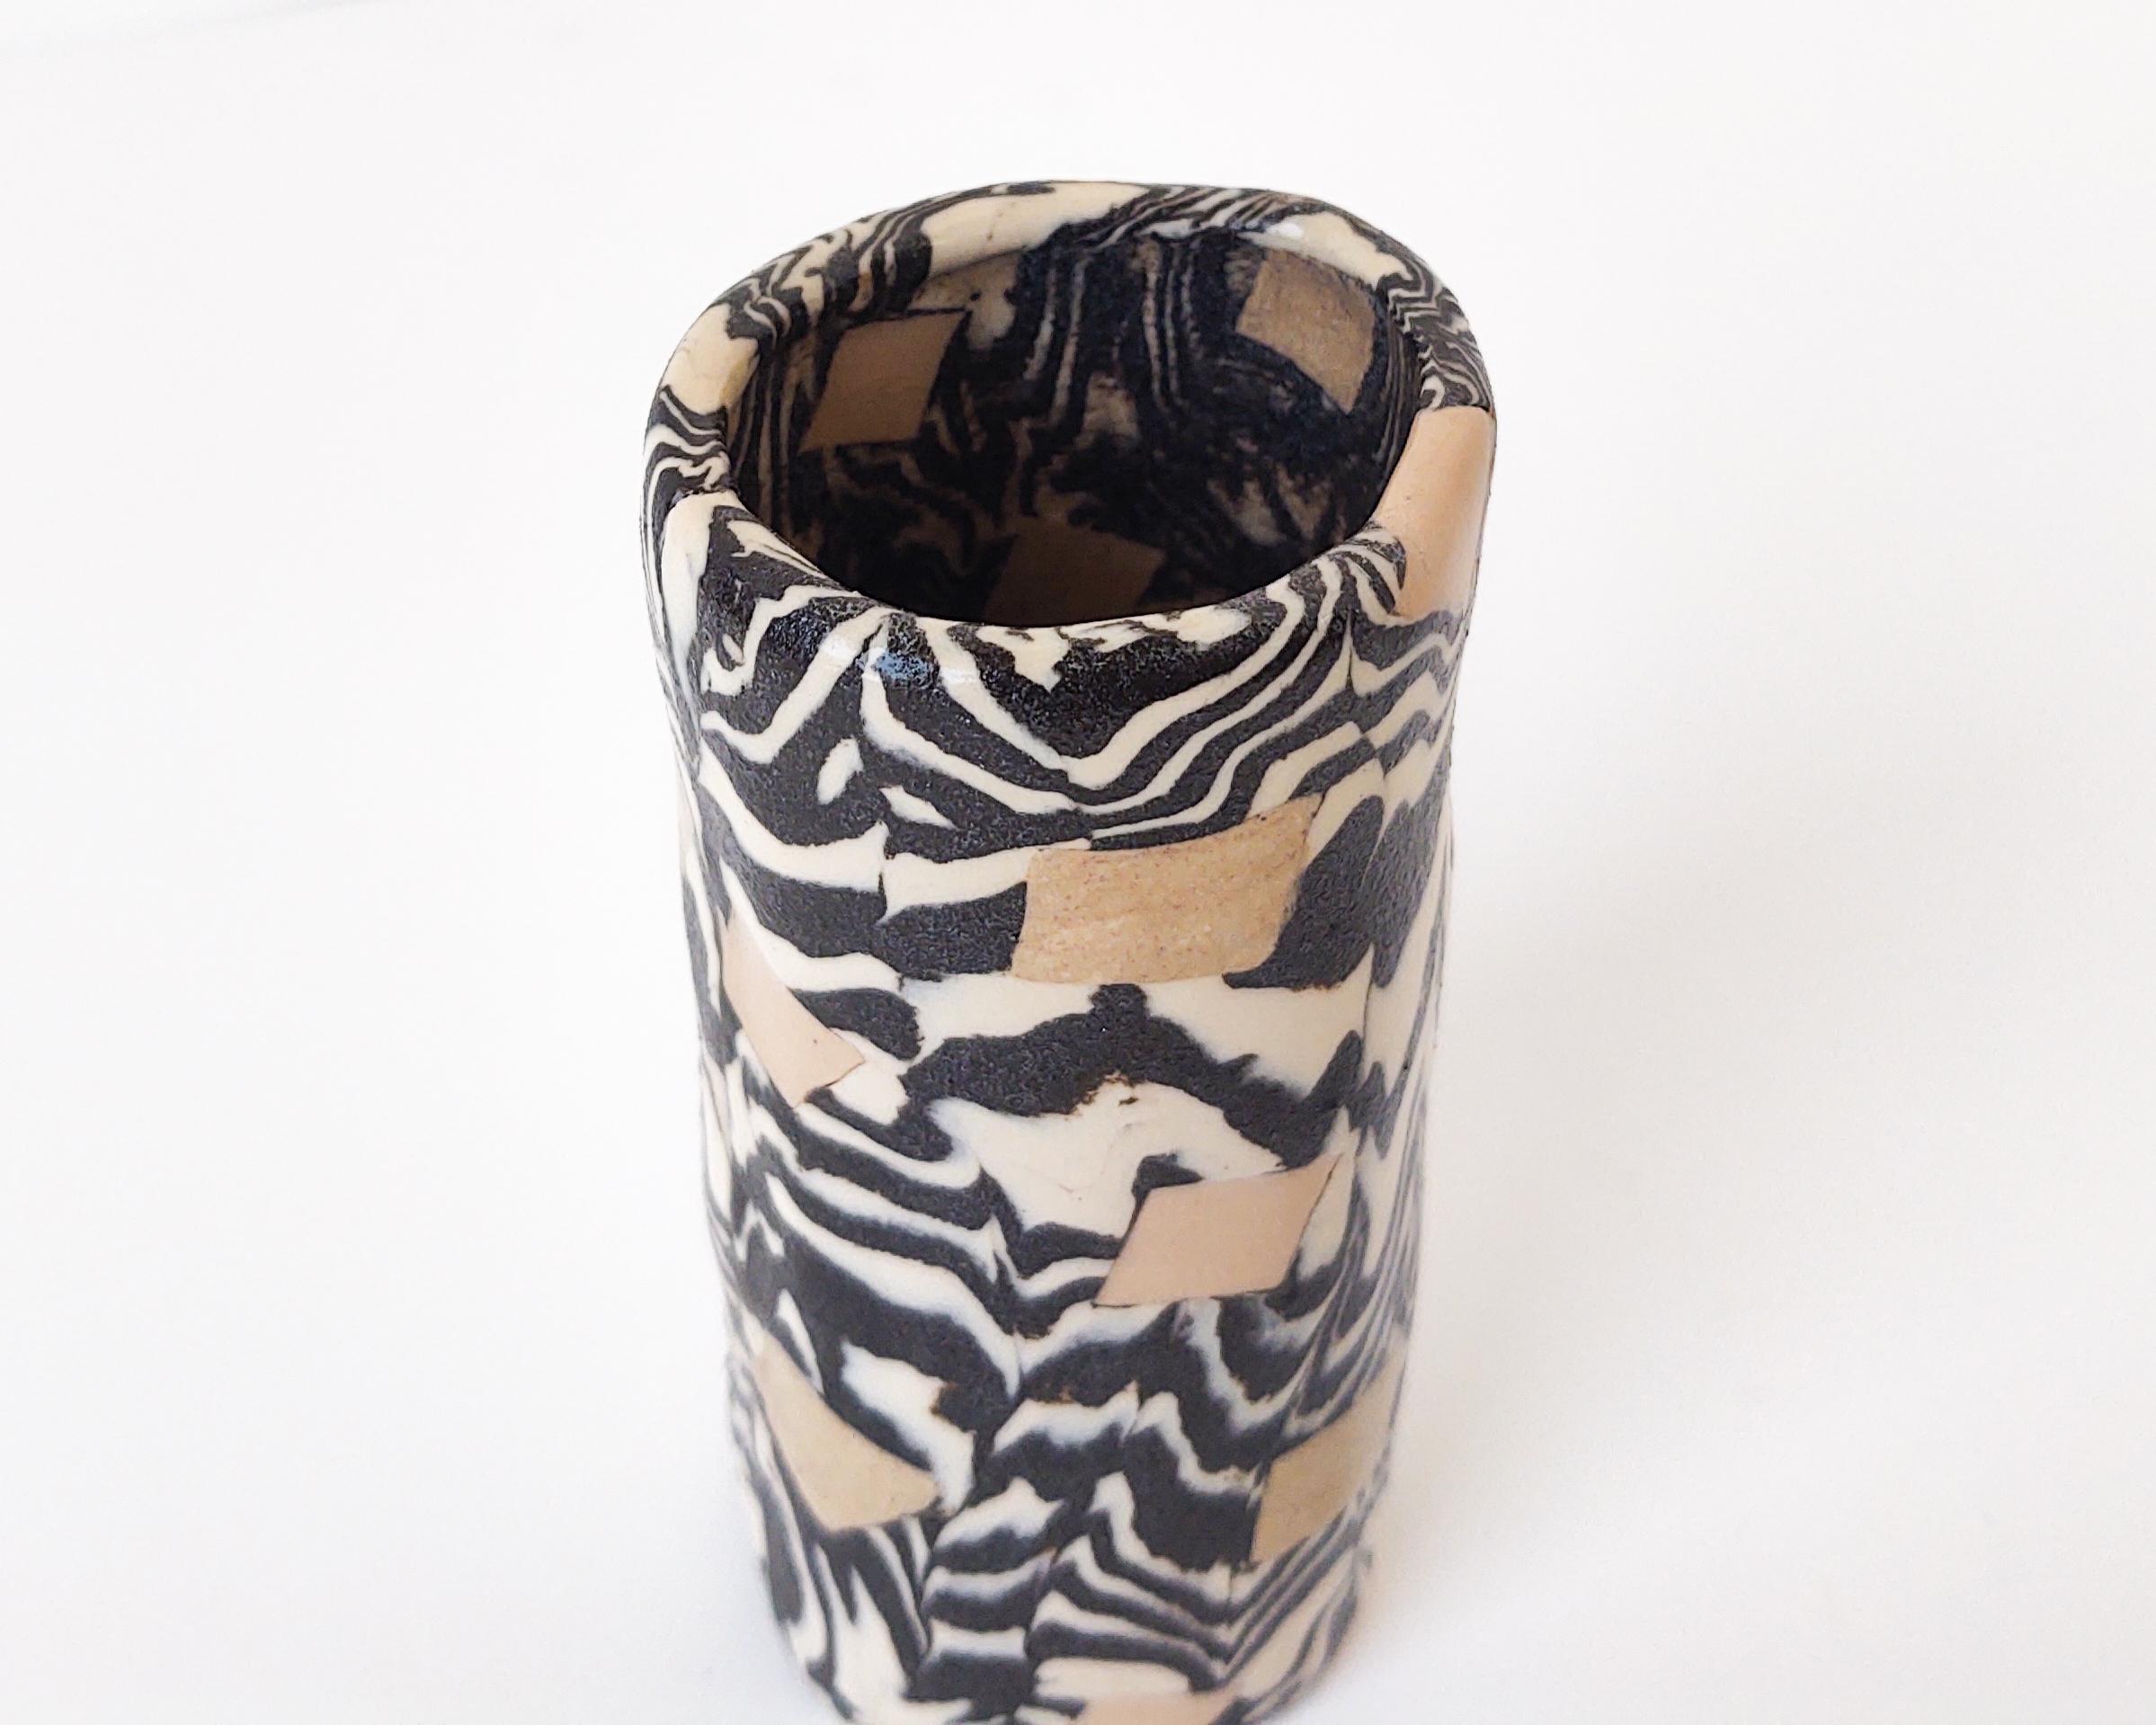 Hand-Crafted Nerikomi Black & White Checkered Ceramic Vase by Fizzy Ceramics